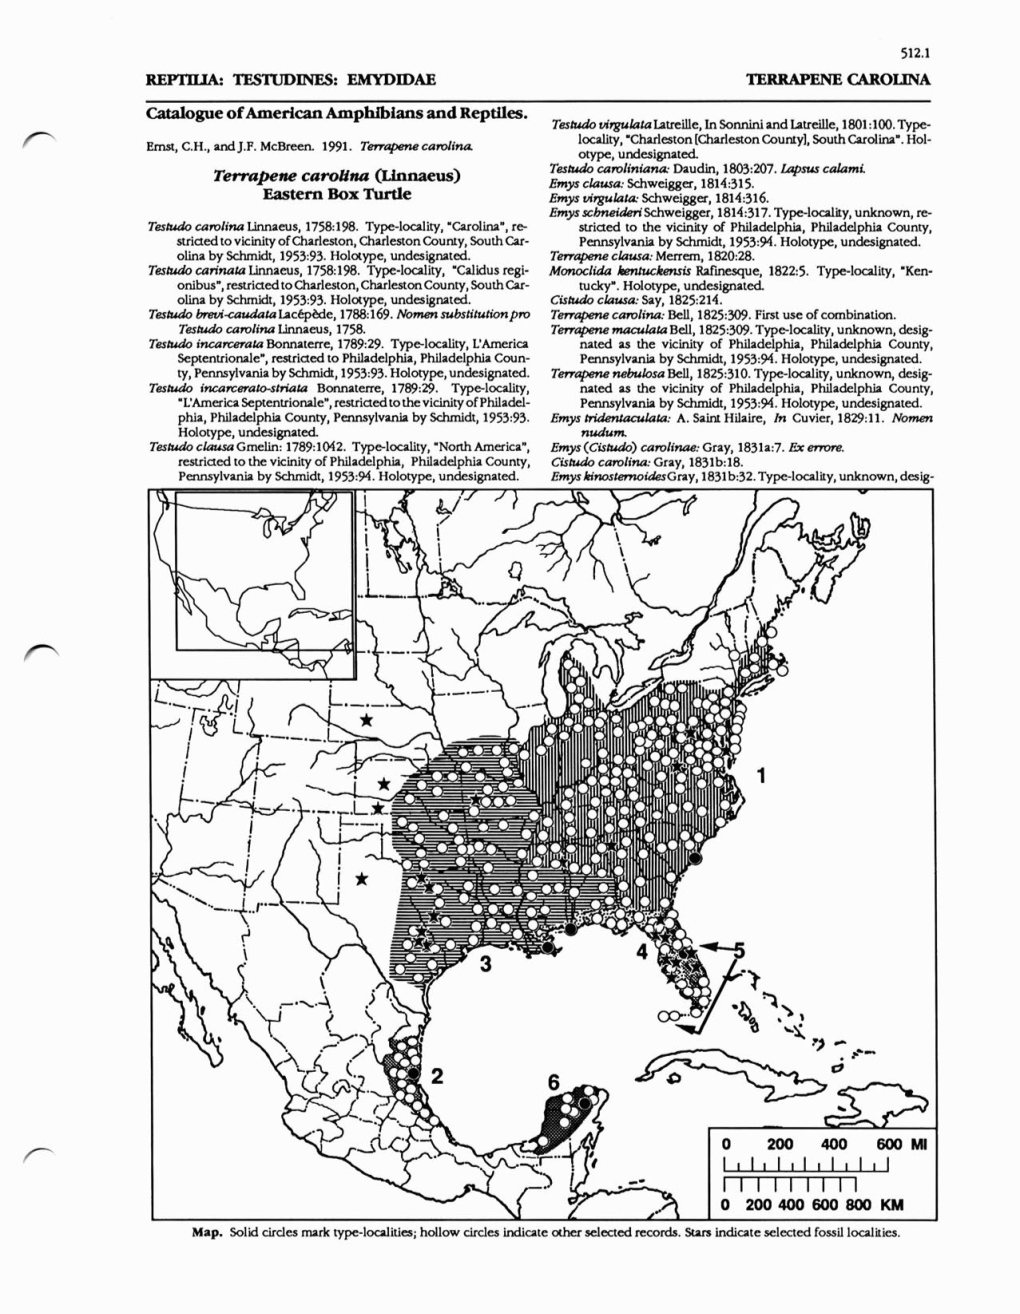 TERRAPENE CAROLINA Catalogue of American Amphibians and Repti1es